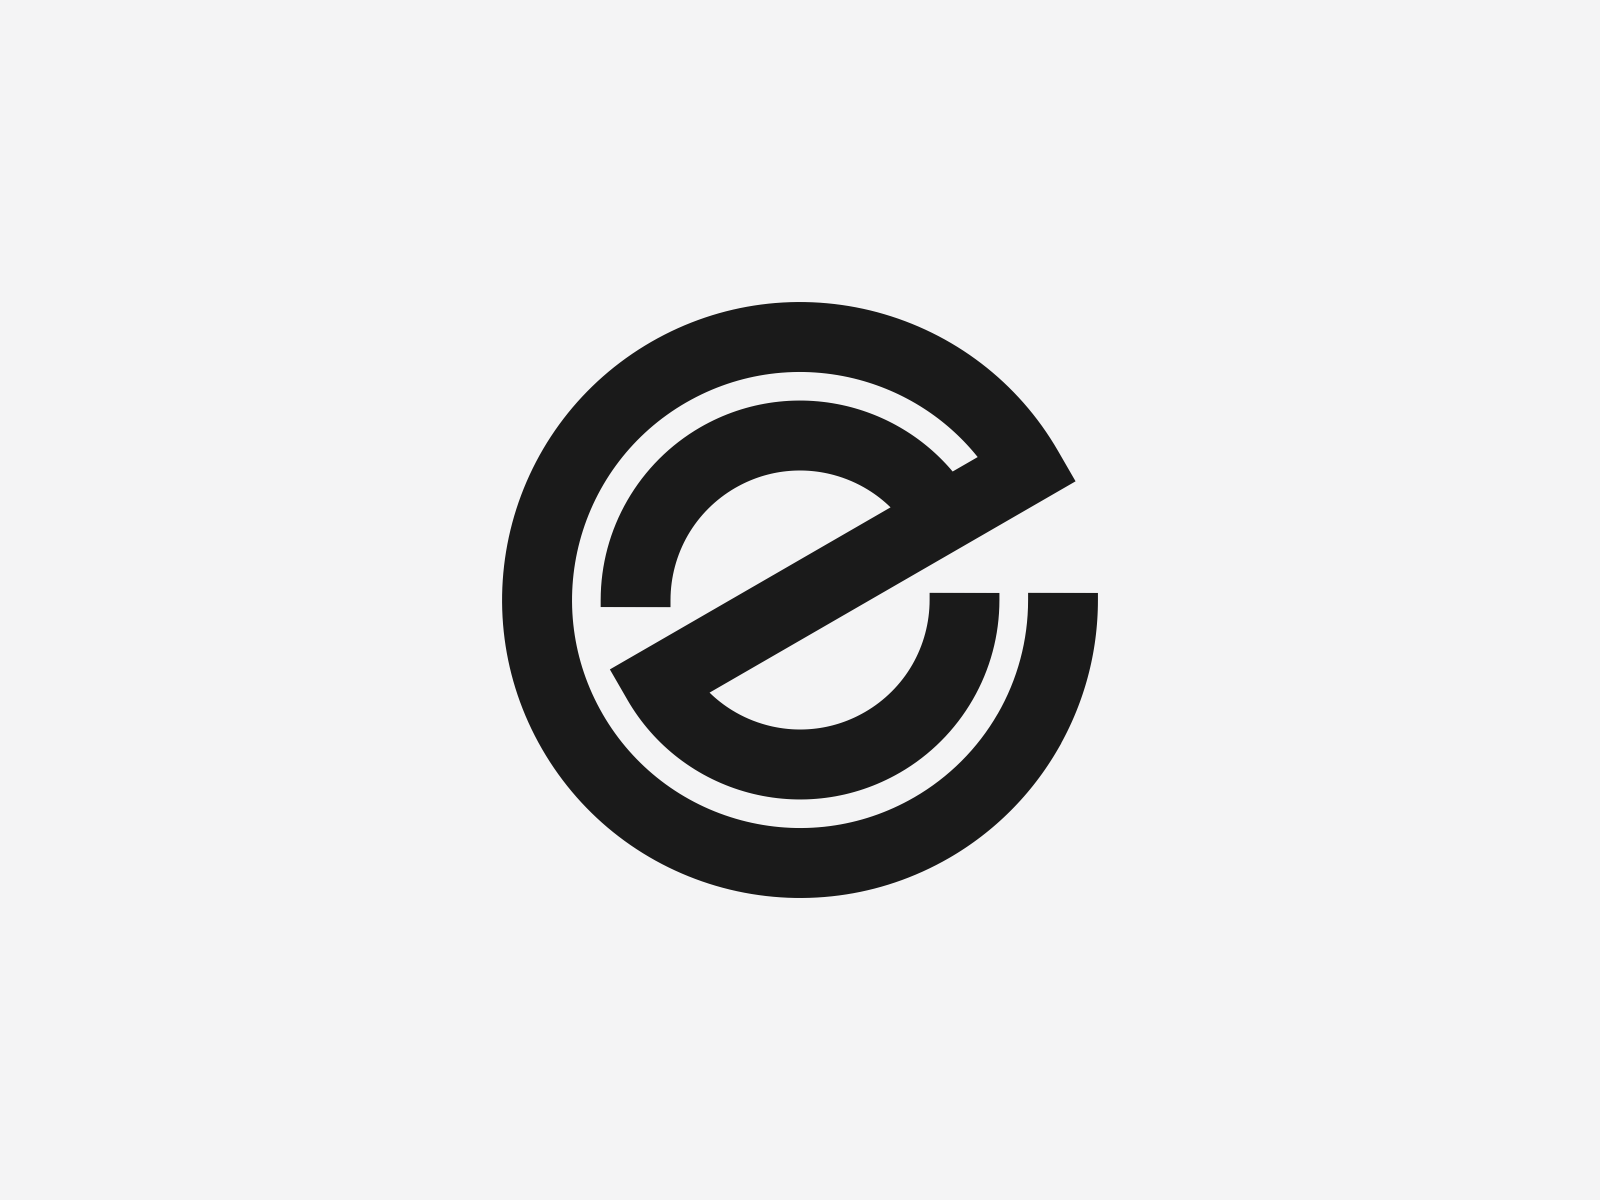 EC Logo by Creative Designer on Dribbble